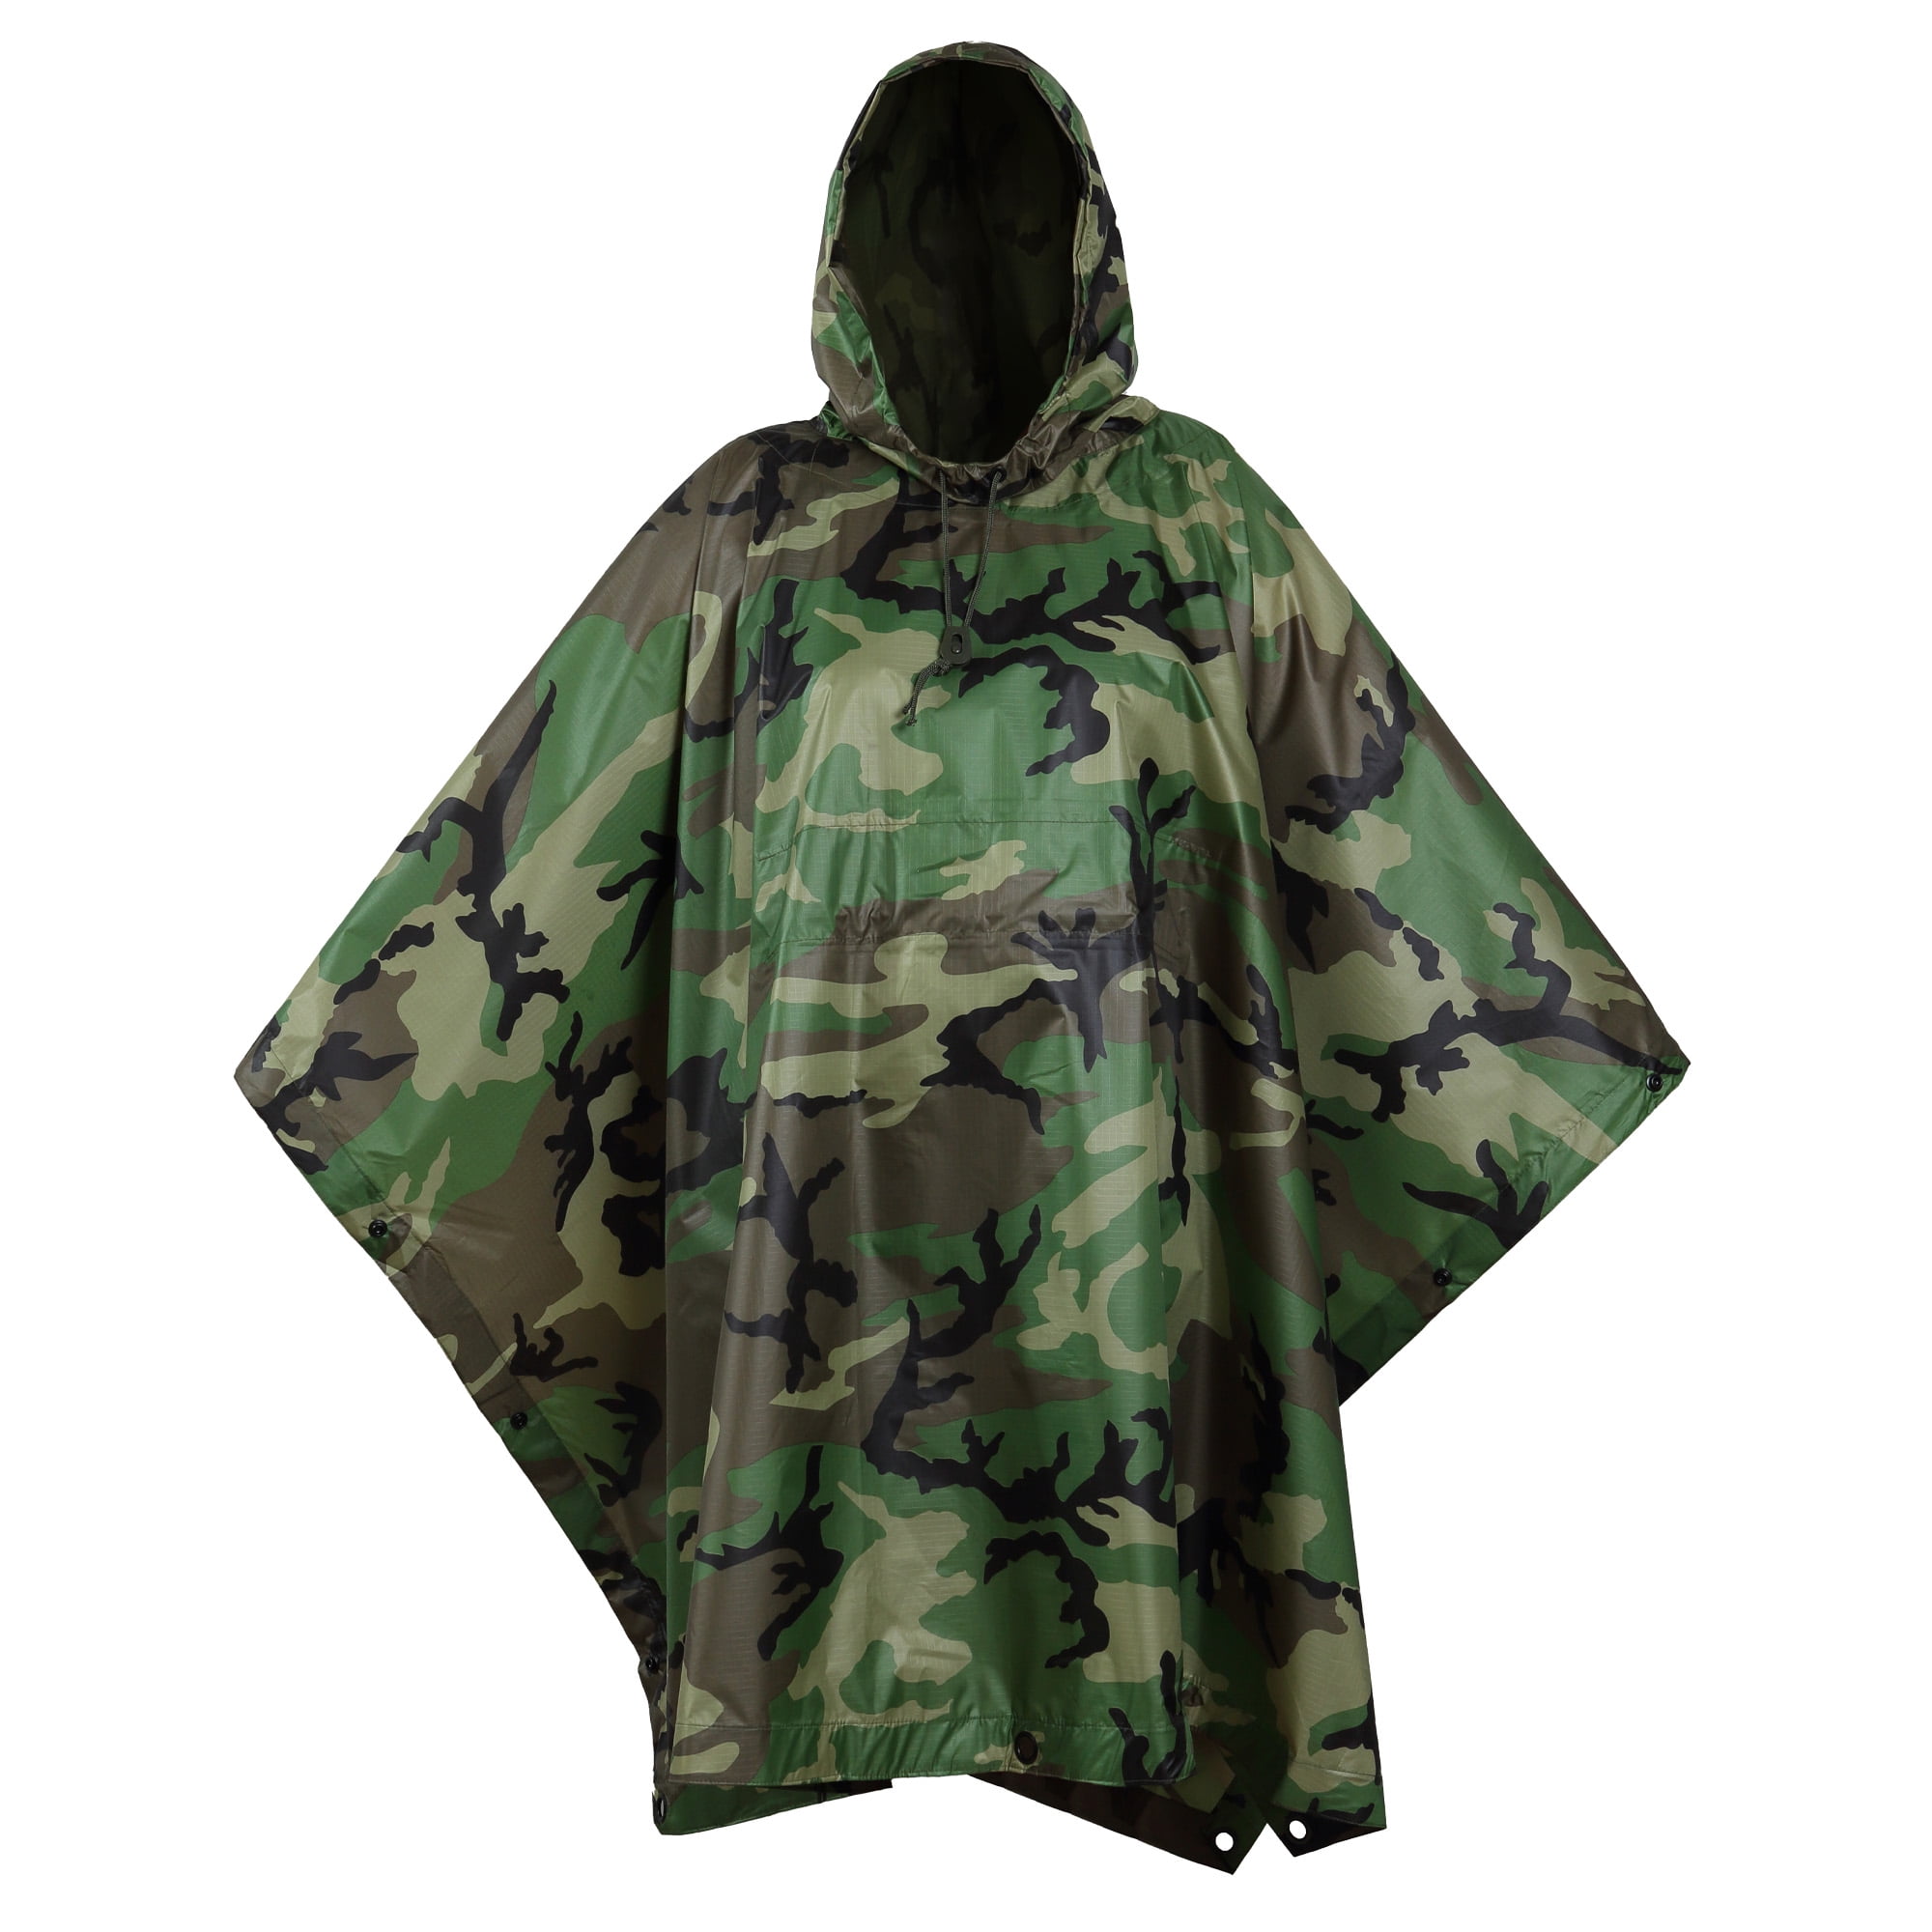 USGI Industries Military Style Poncho Multi Use Rip Stop Camouflage Rain Poncho 